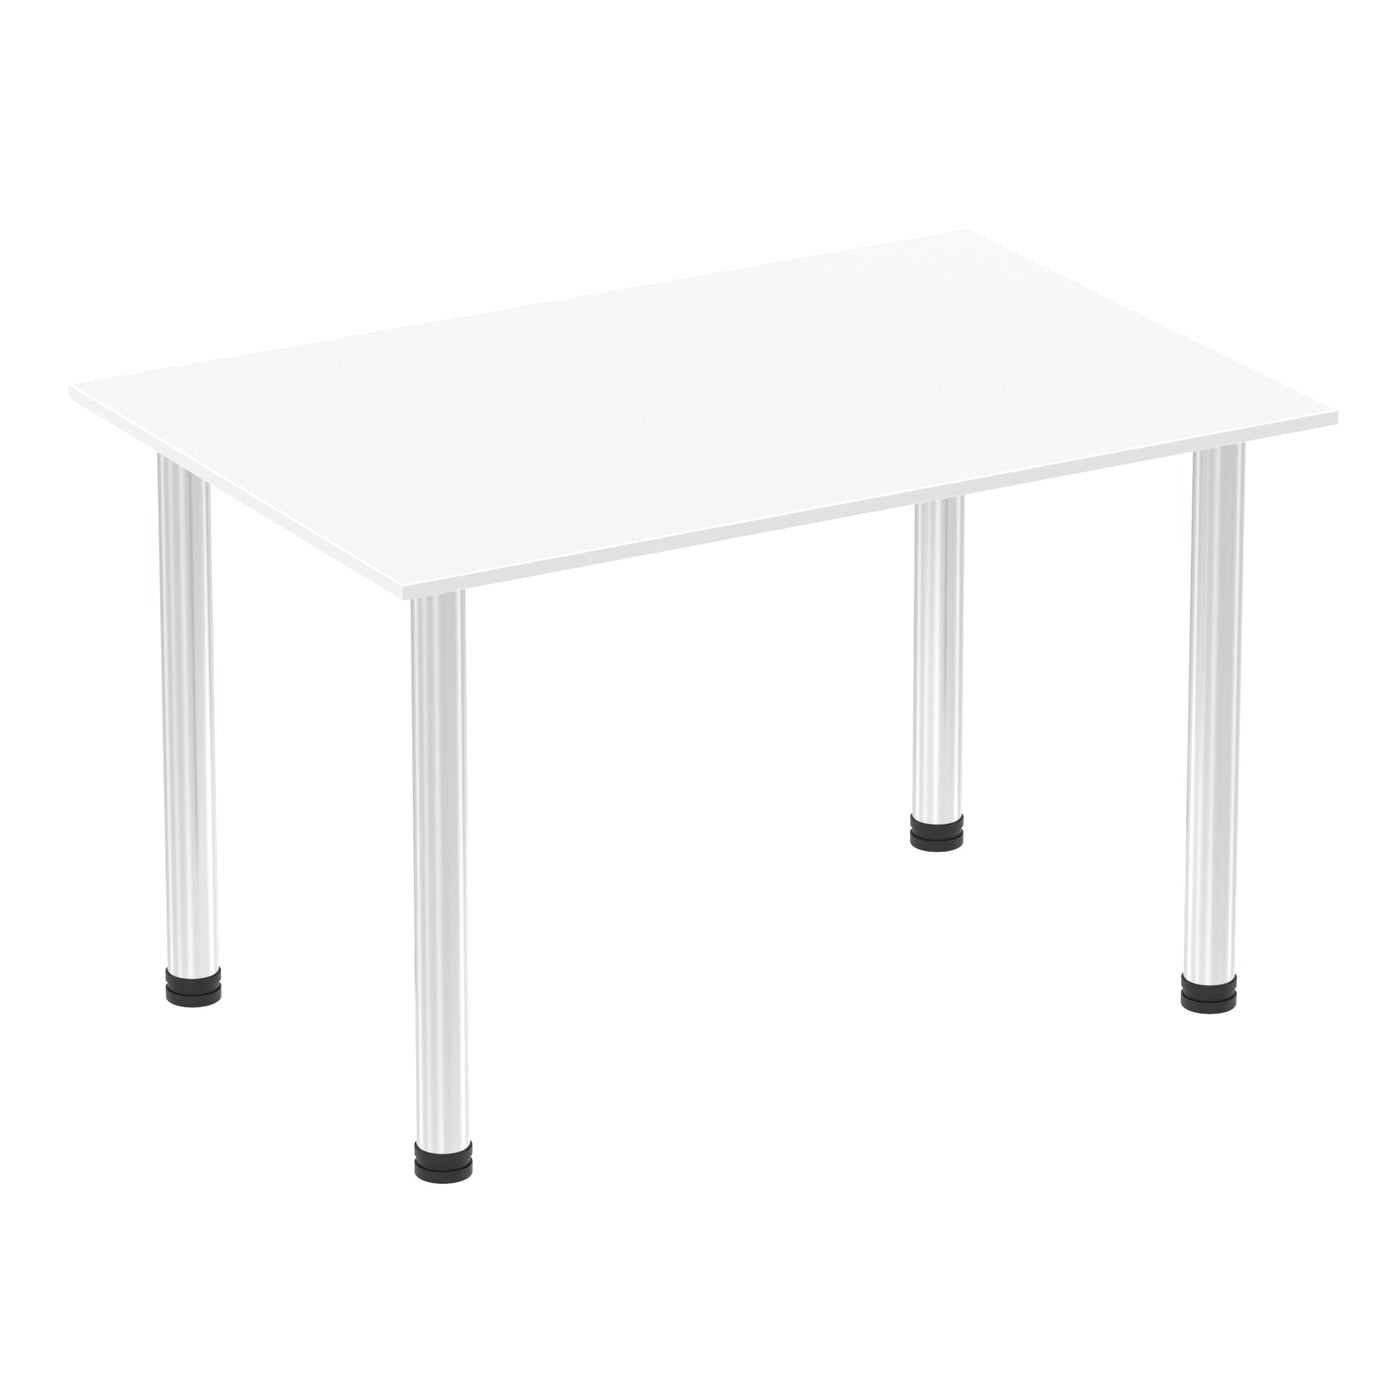 Impulse 1200mm Straight Desk with Post Leg | Home Office Furniture | Wooden Desk | Simple Desk | Homework Desk | Work From Home Desk | Wooden desk with white legs